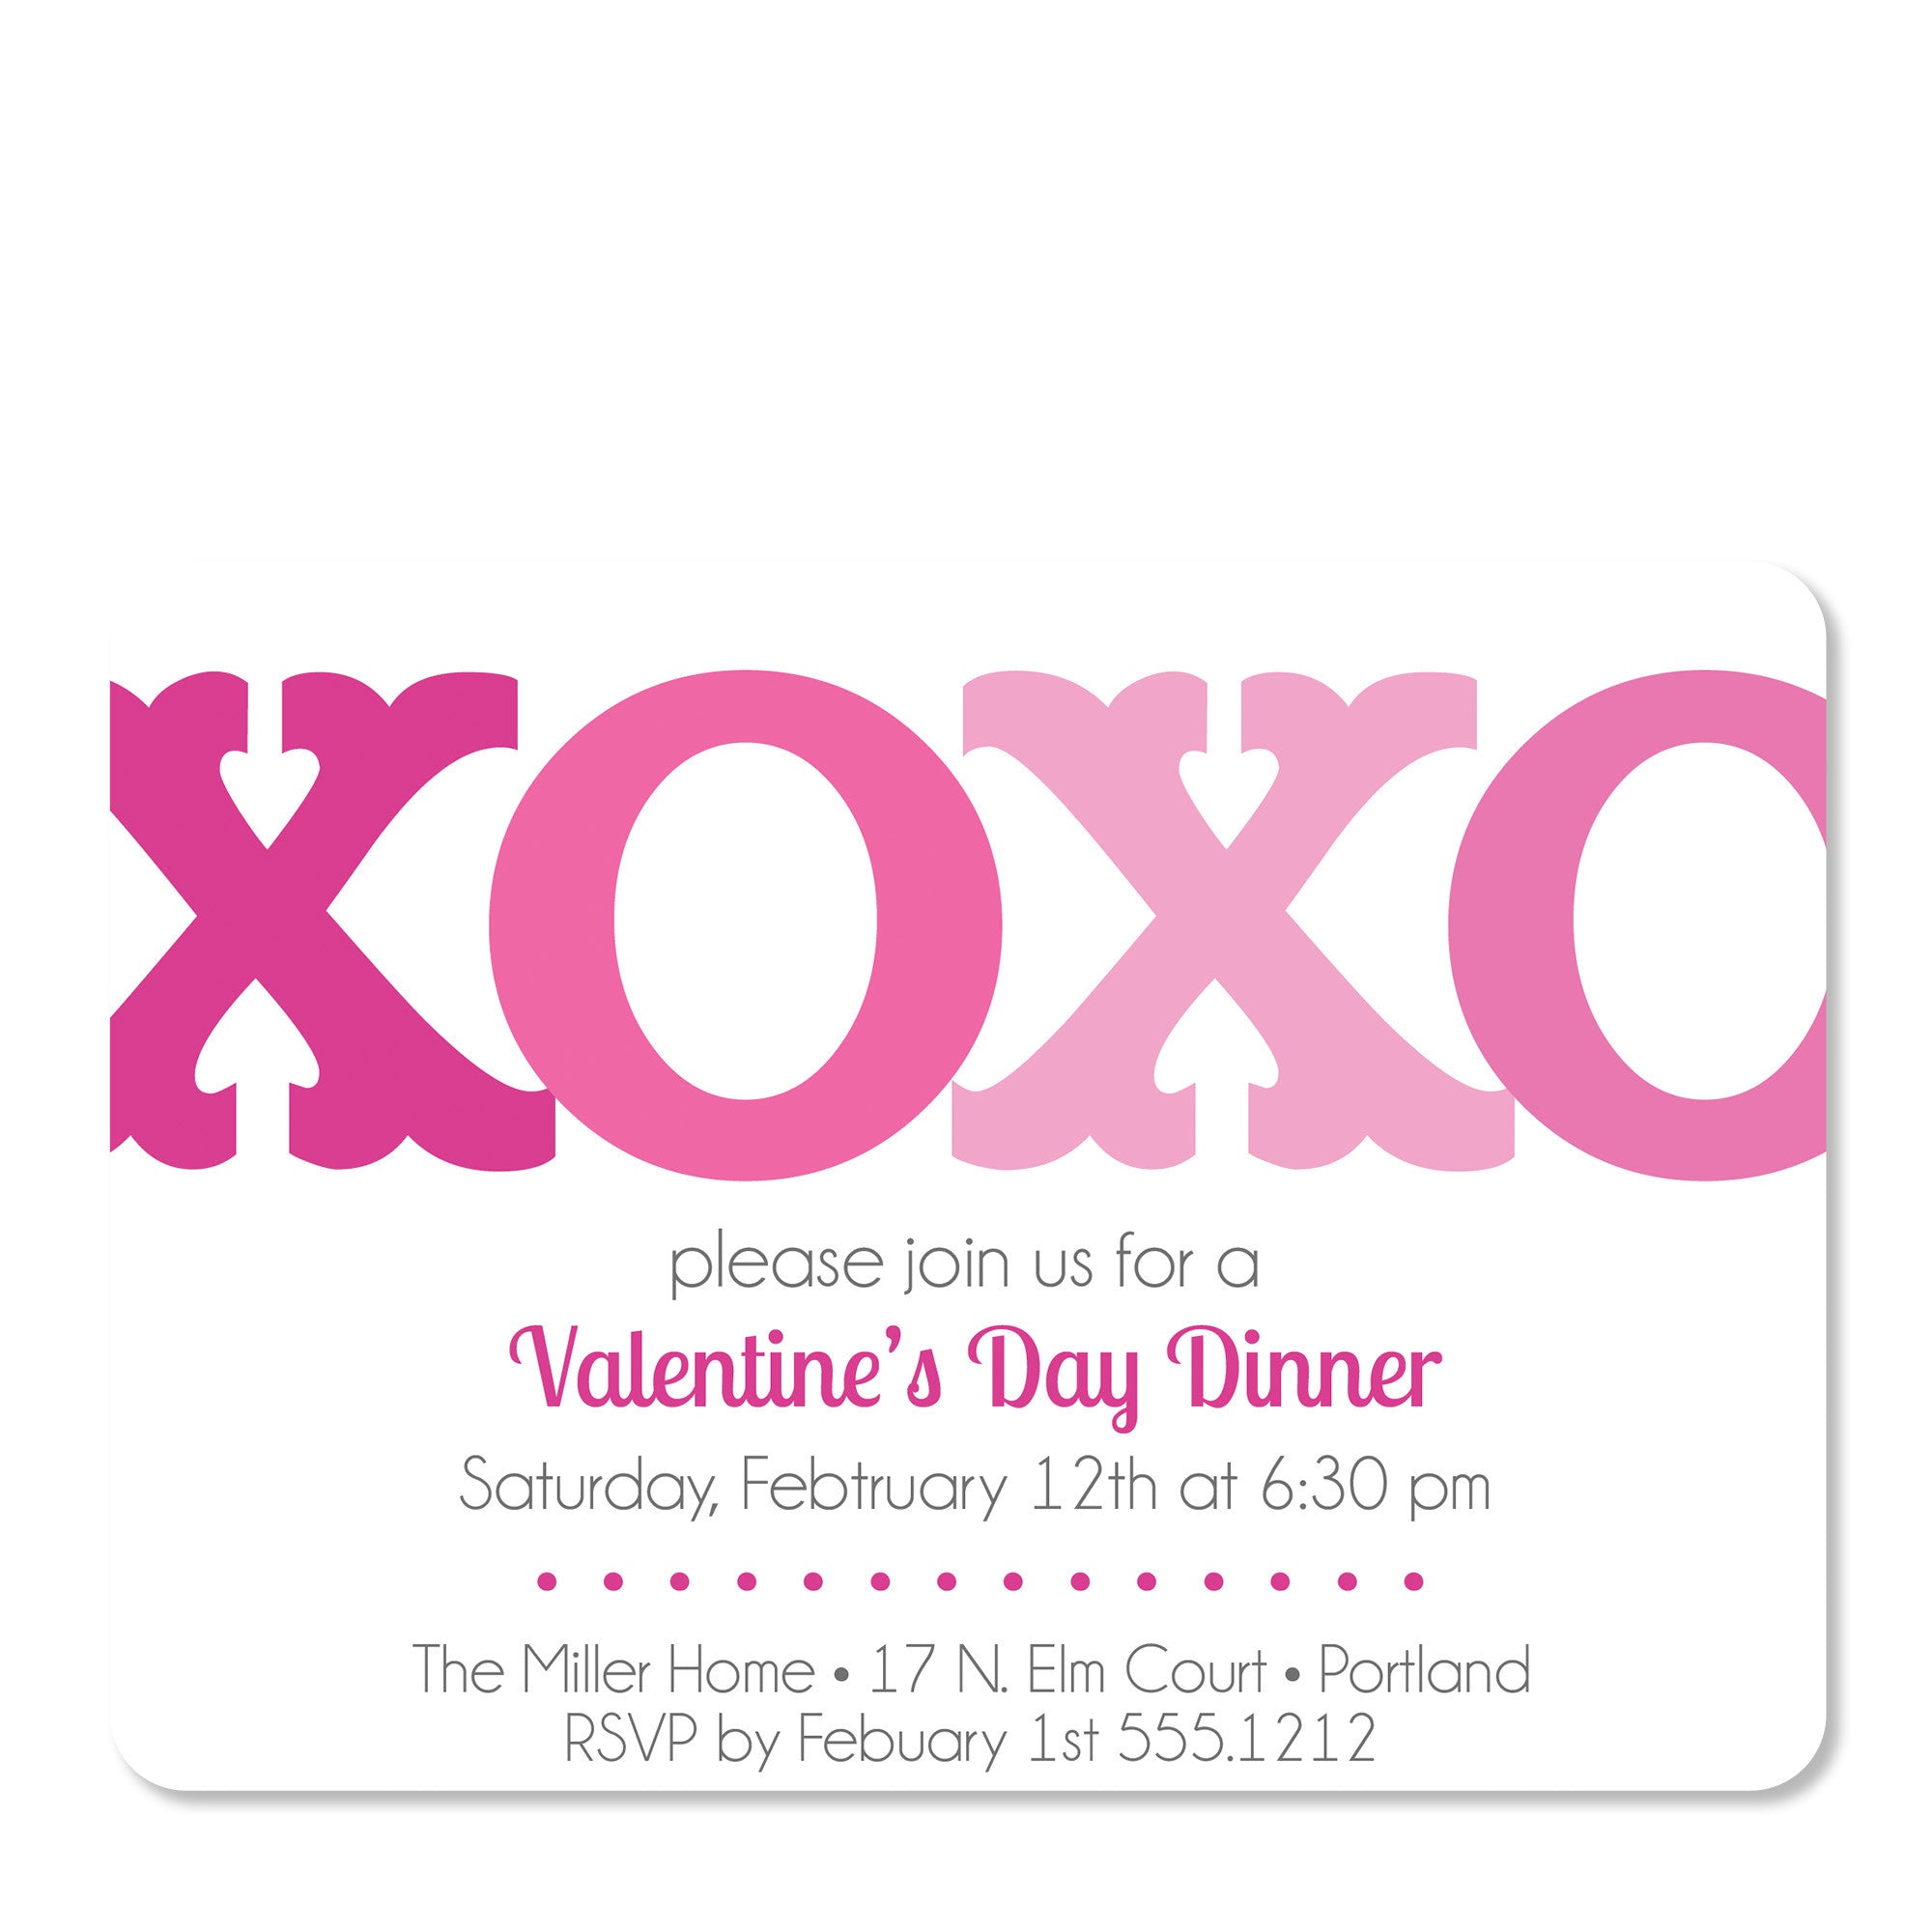 XOXO Valentine's Day Invitation